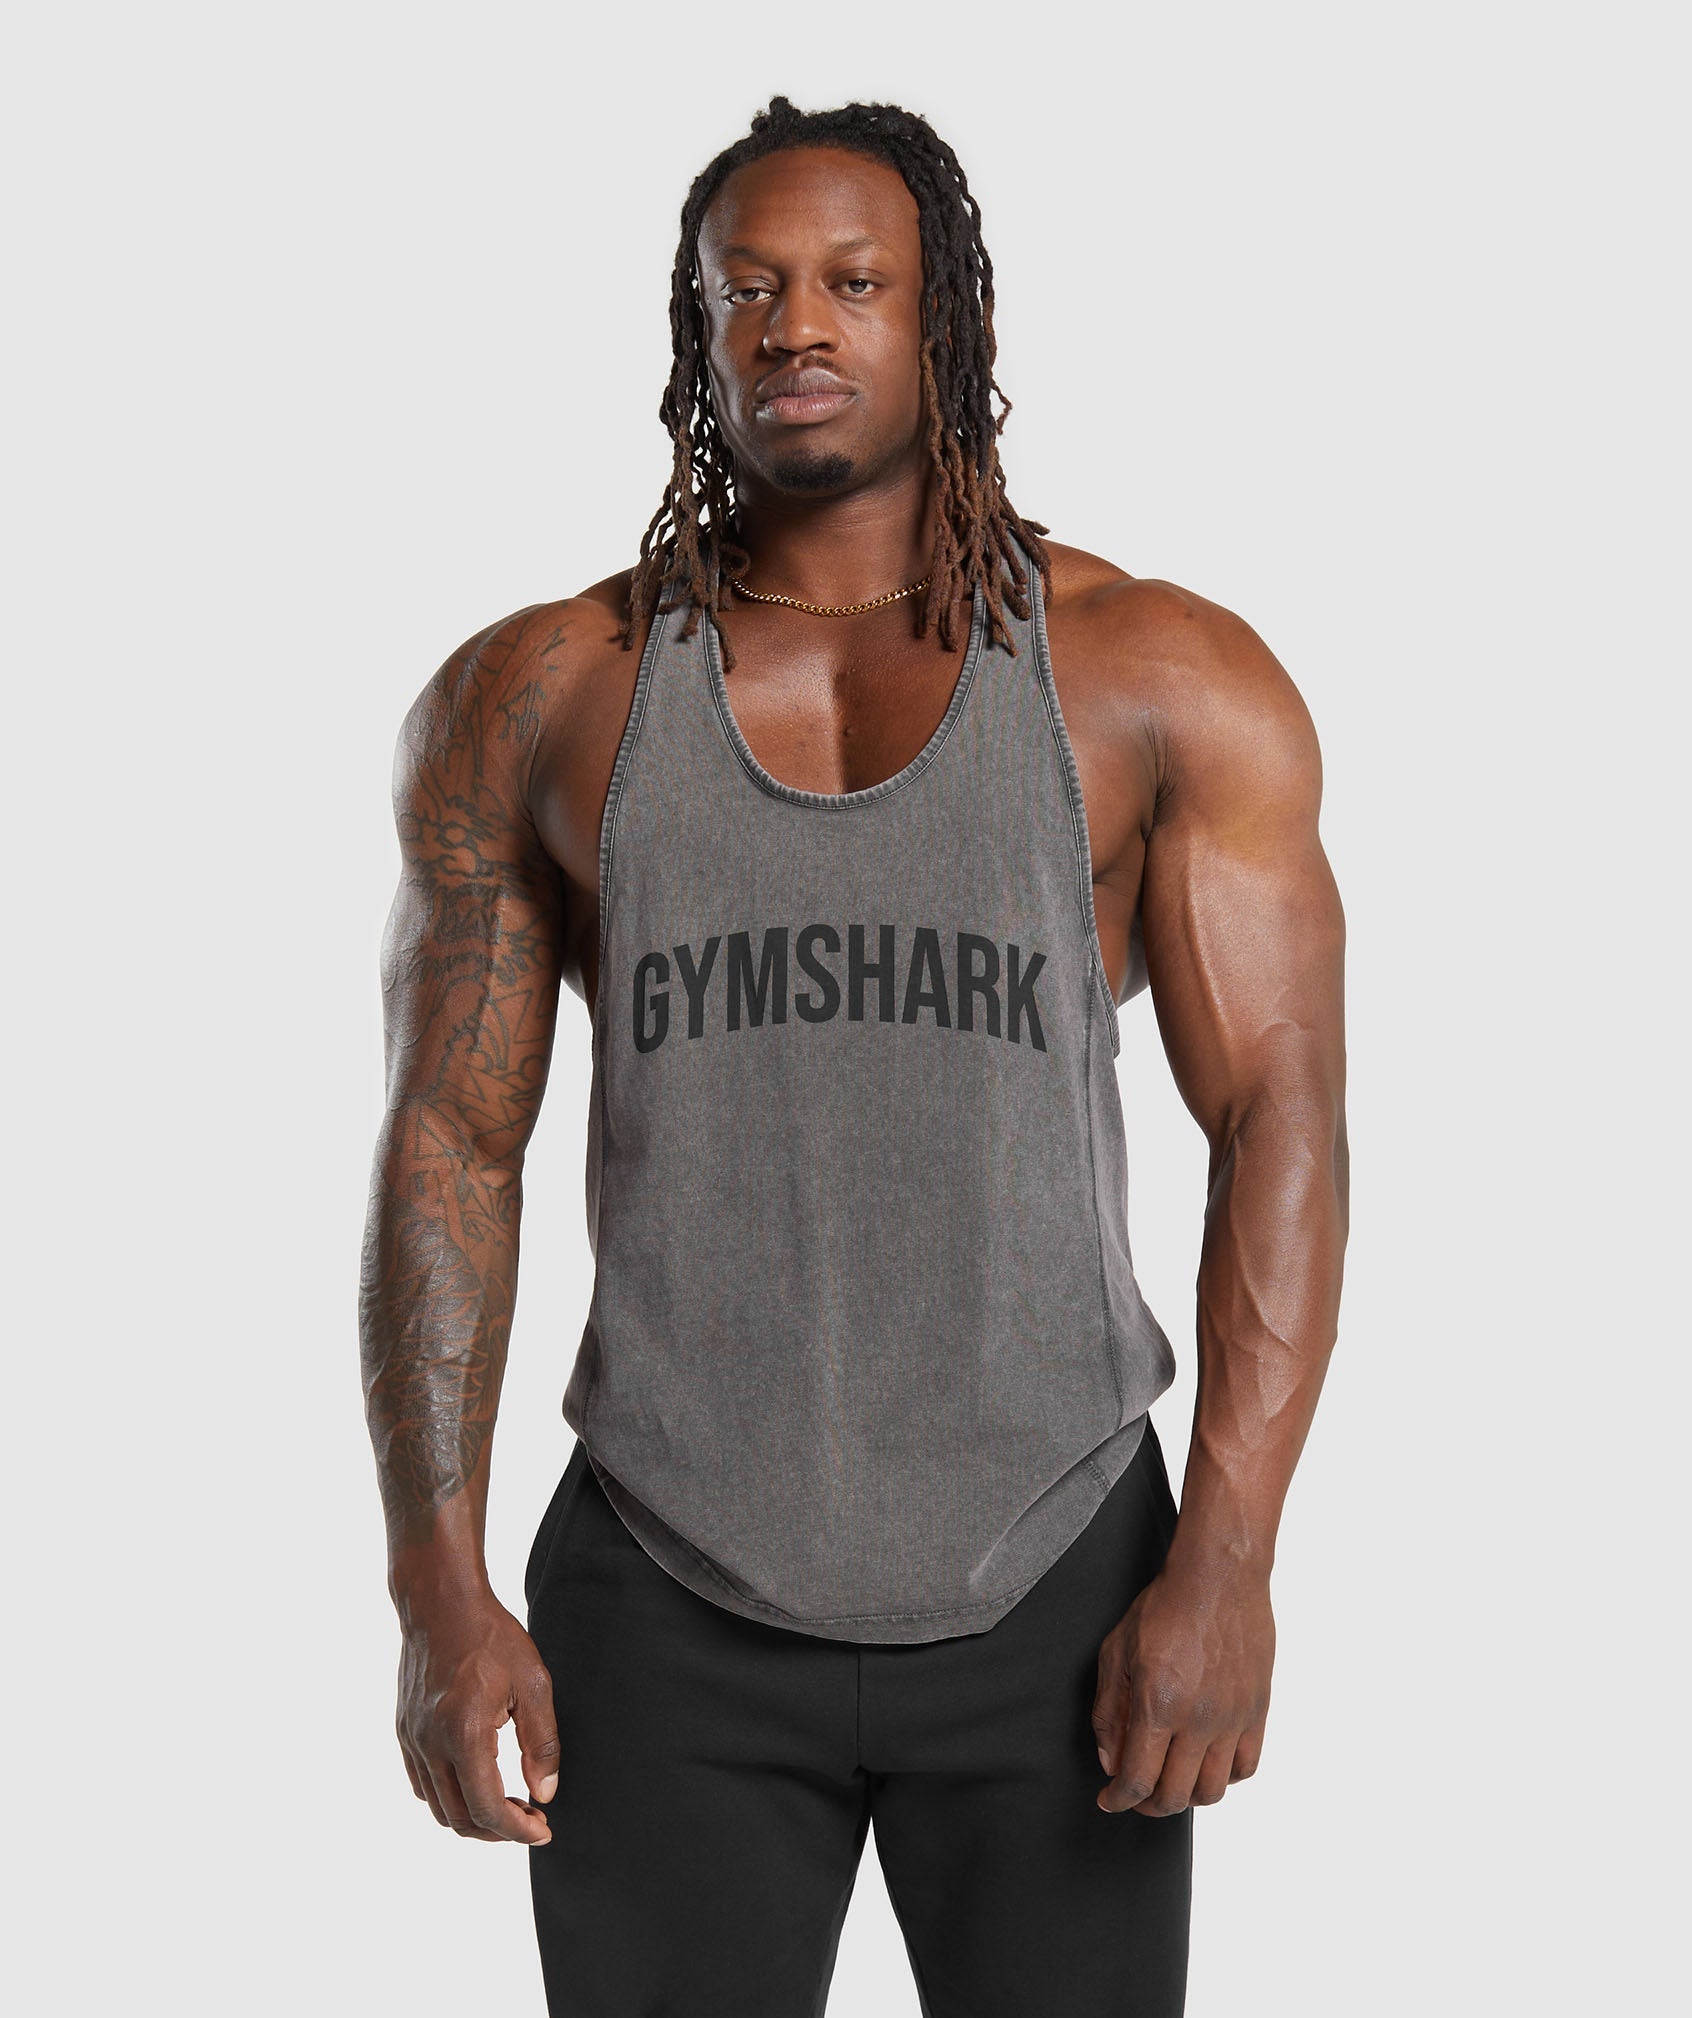 10 Gymshark ideas  gymshark, gym men, mens workout clothes